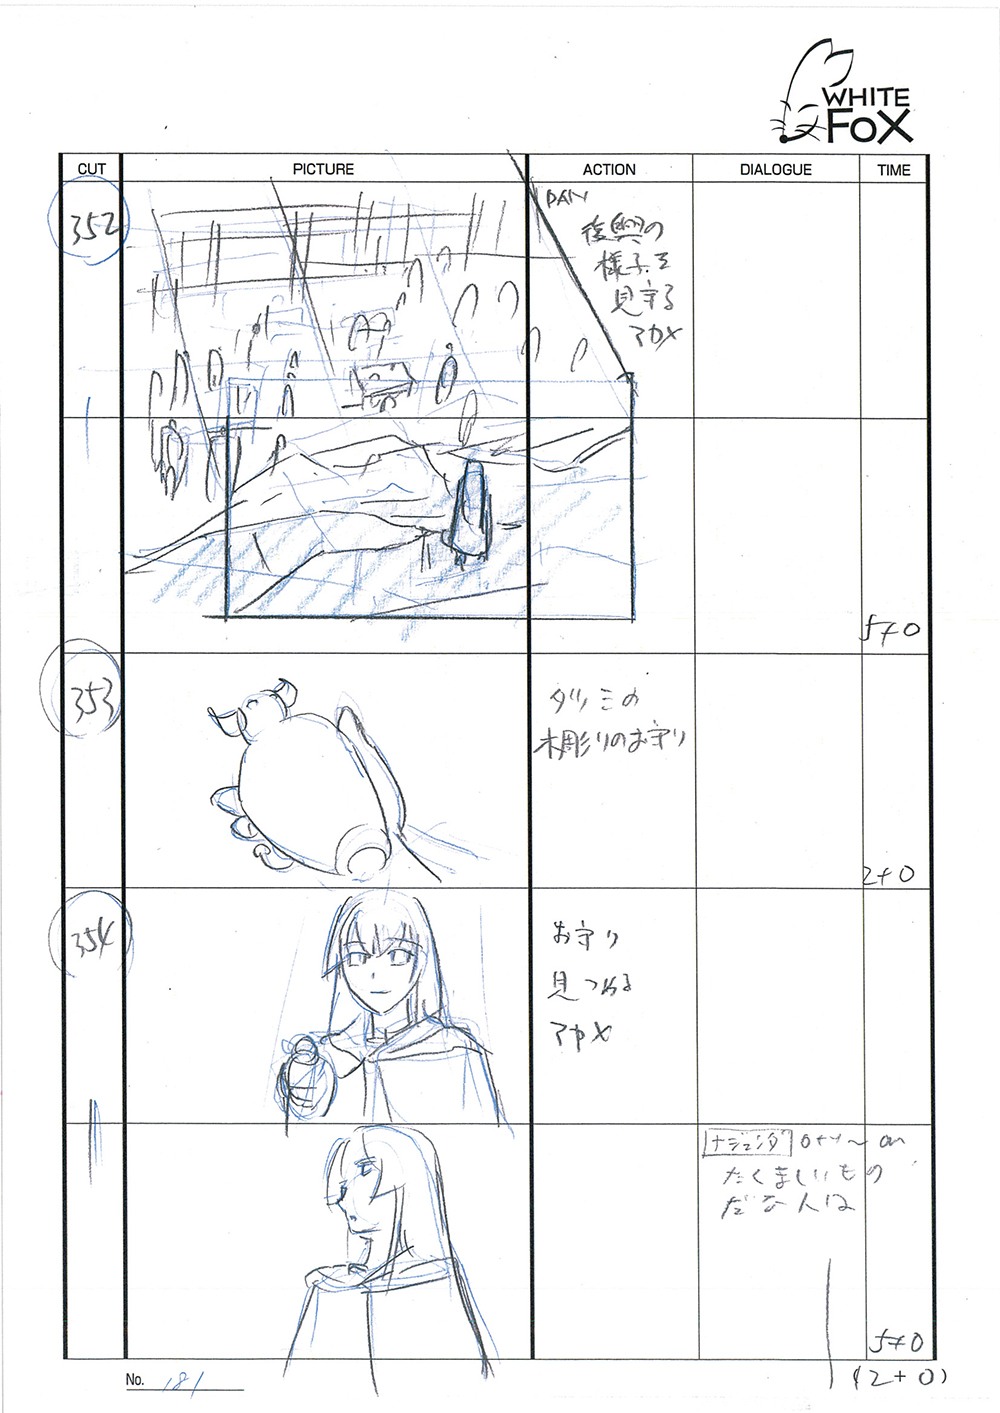 Akame ga Kill Episode 24 Storyboard Leak 186